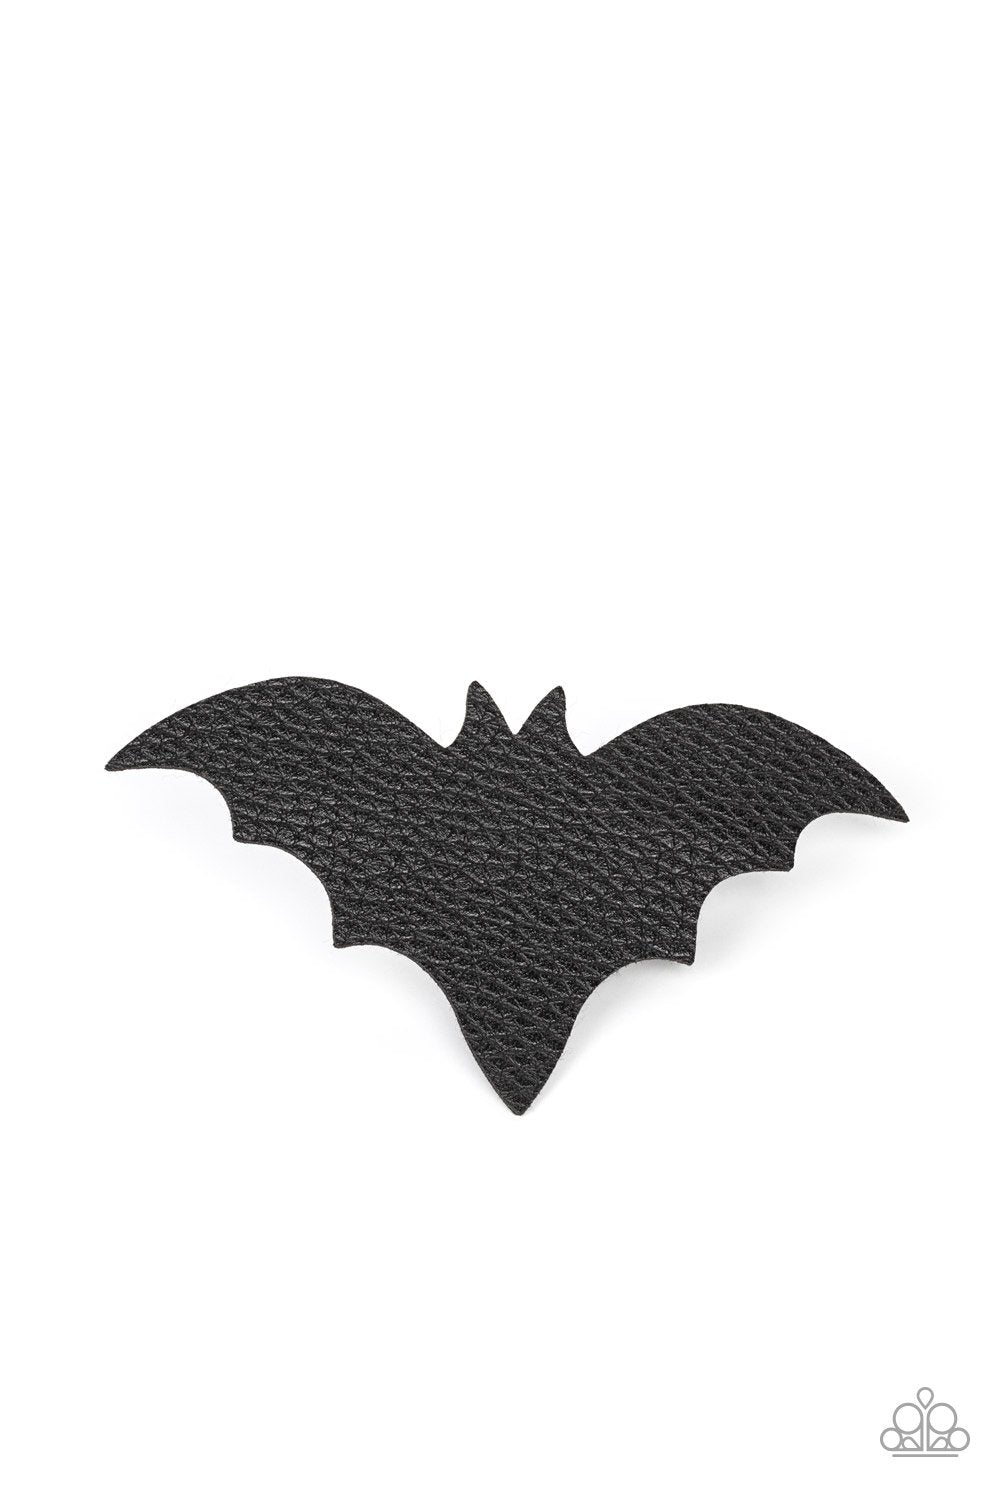 BAT to the Bone Black Leather Bat Hair Clip - Paparazzi Accessories- lightbox - CarasShop.com - $5 Jewelry by Cara Jewels